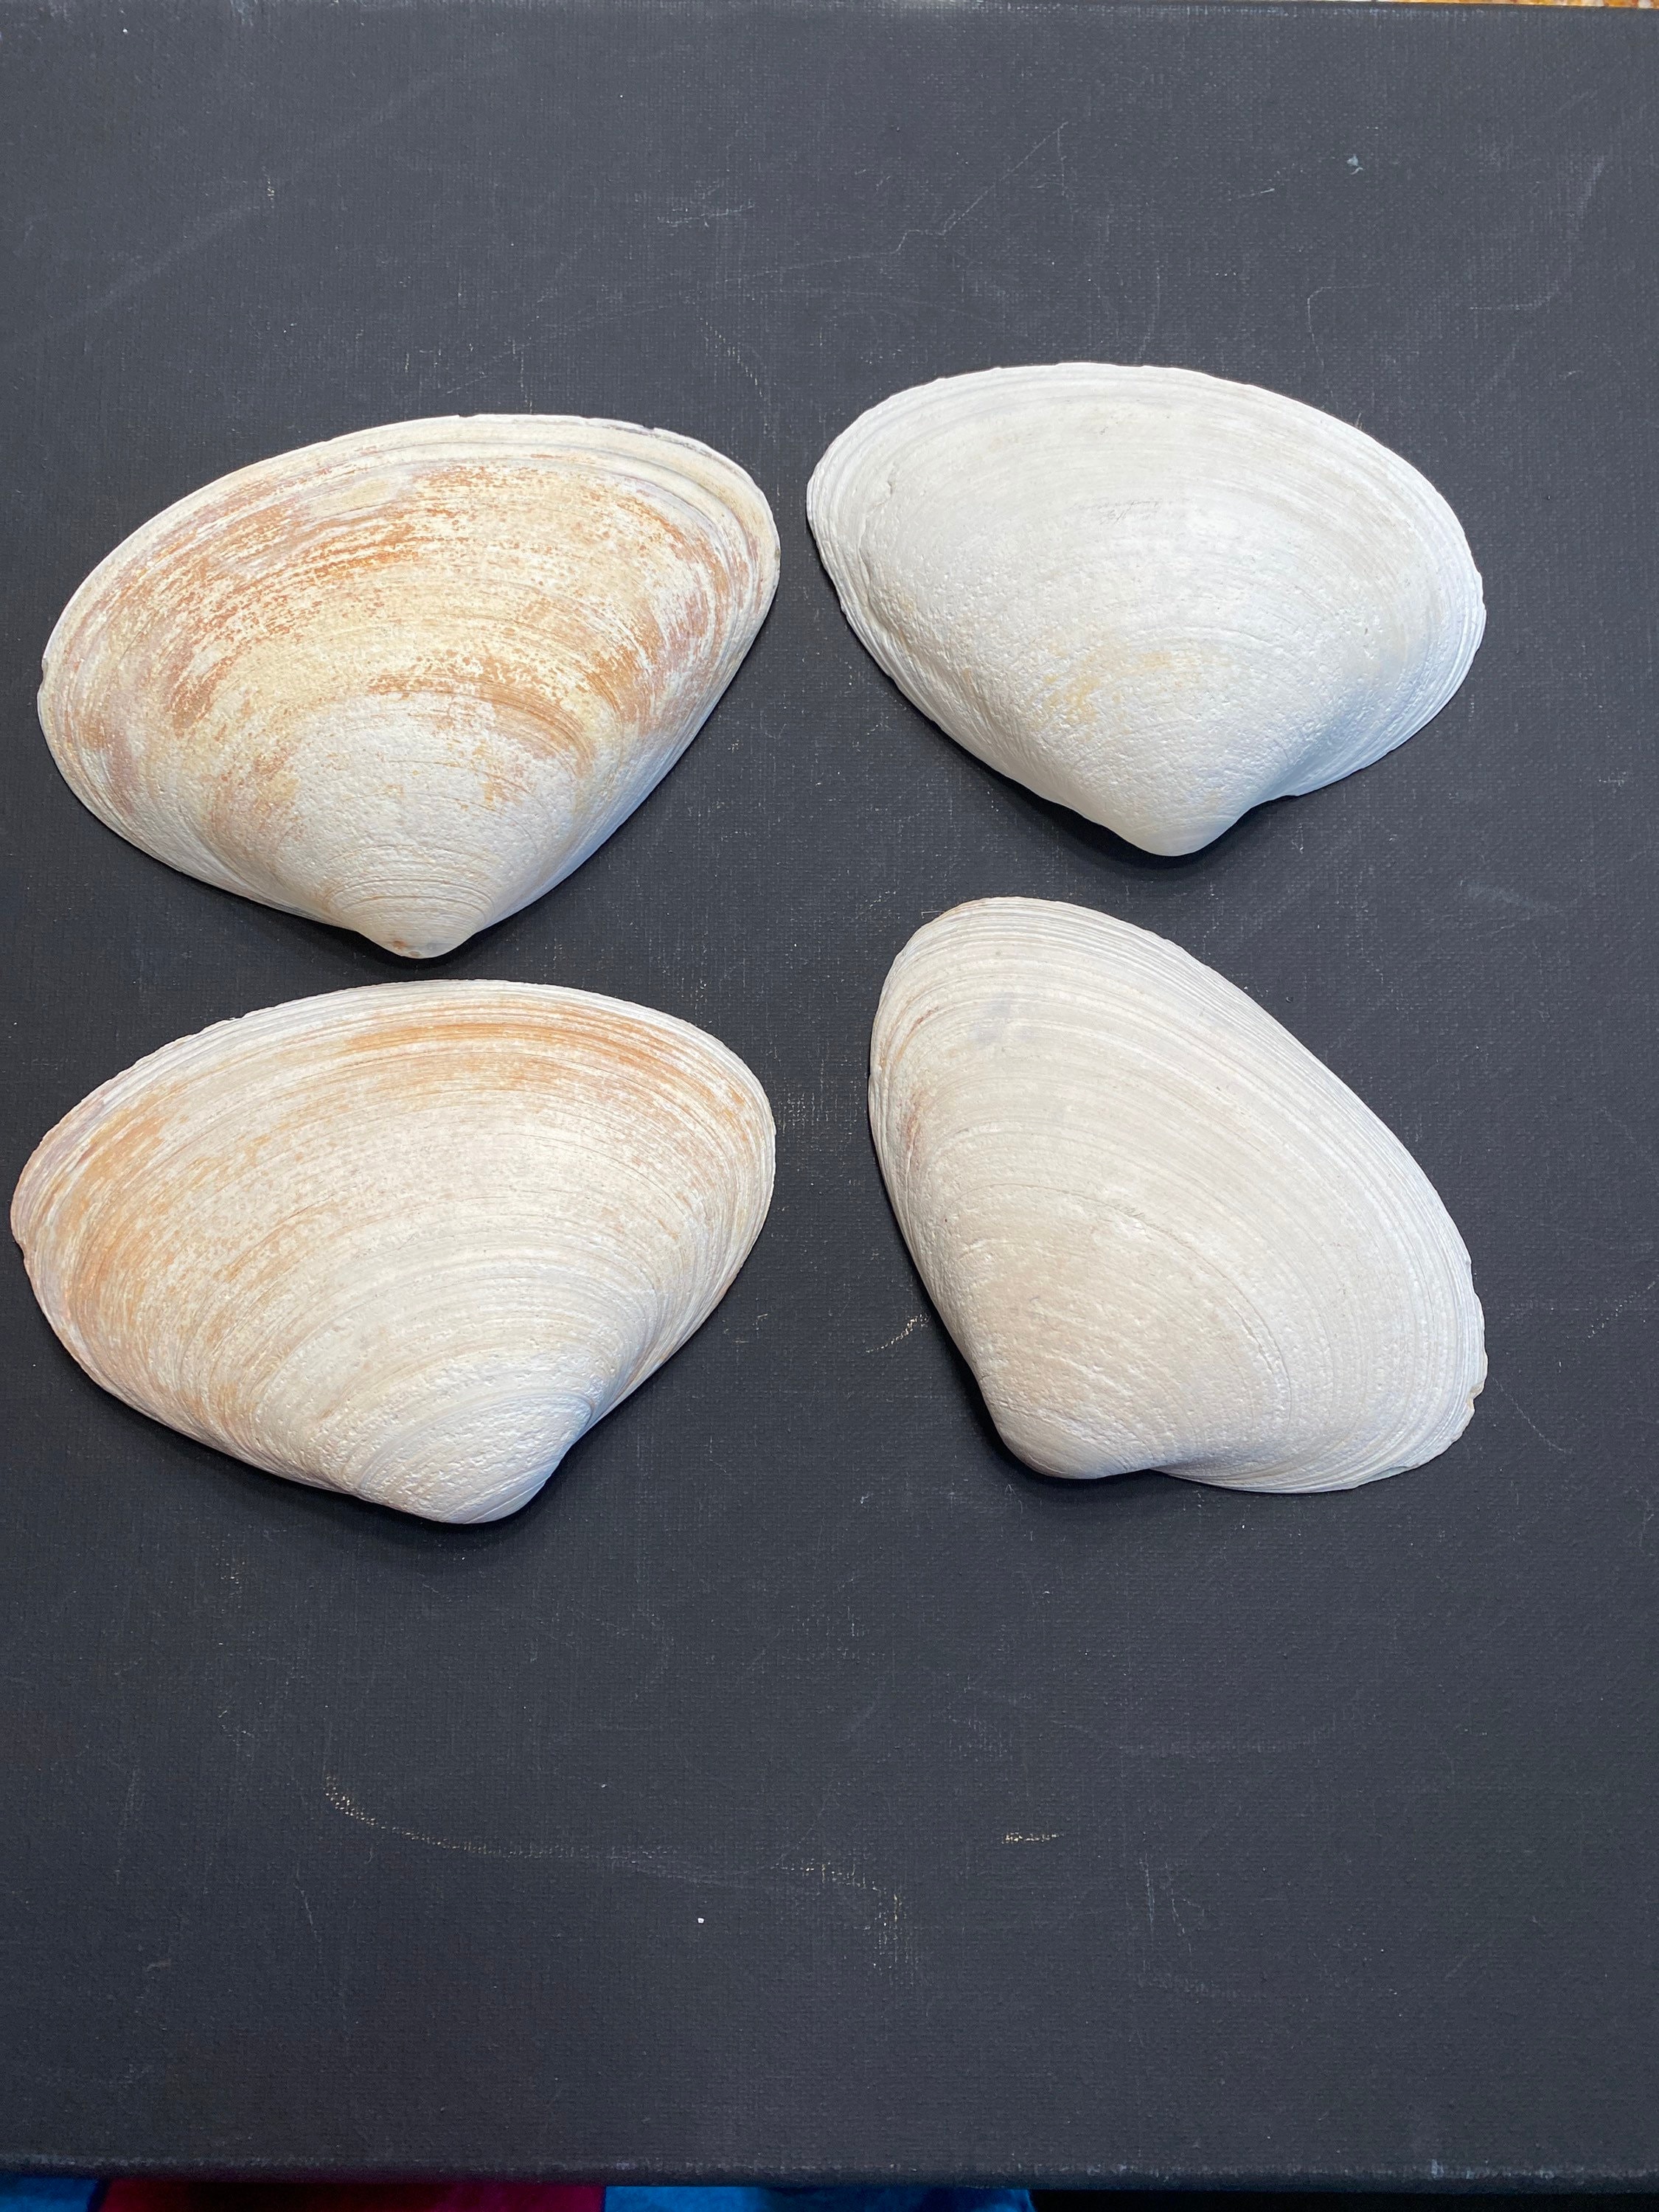 Calico Atlantic Scallop Seashells - Argopecten Gibbus - (10 shells approx.  2 inches)